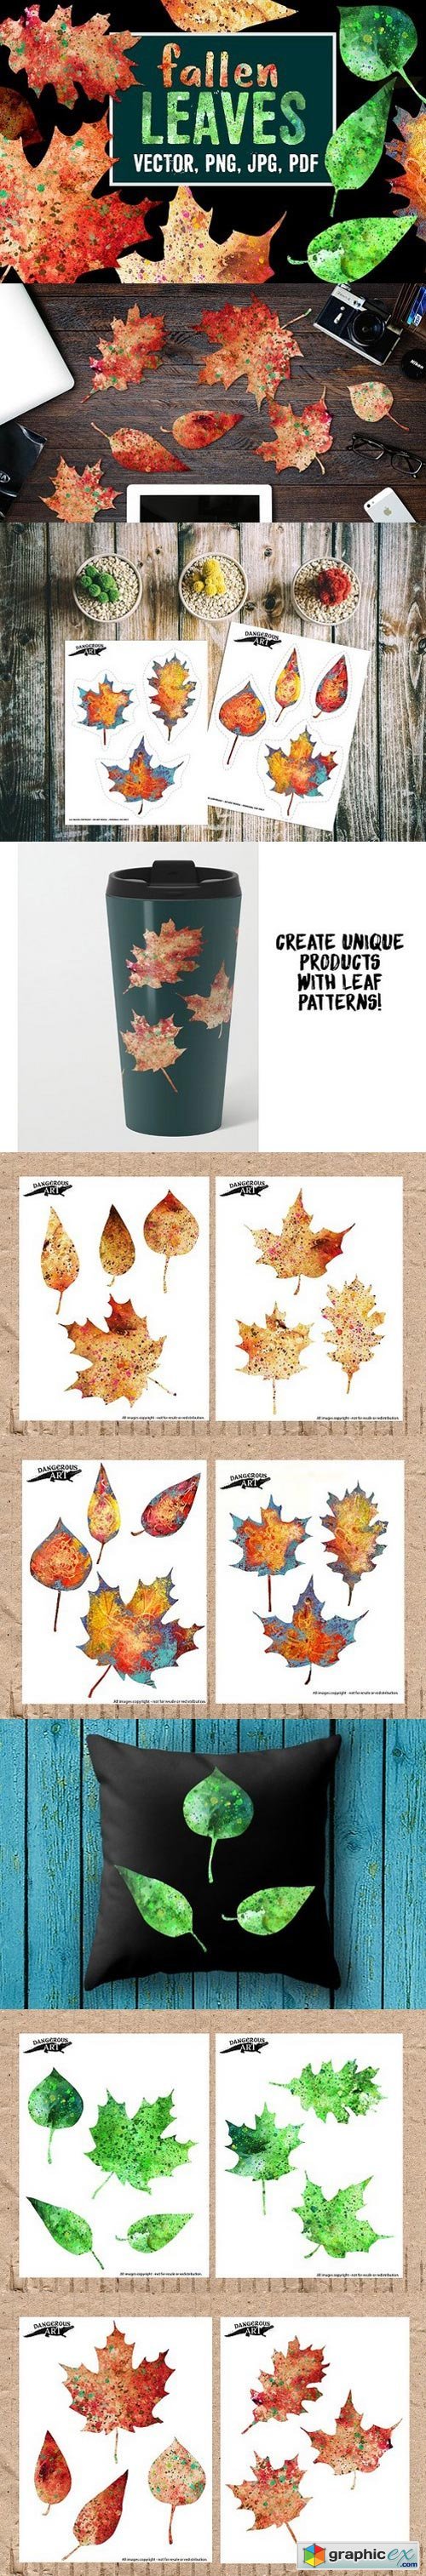 Fallen Leaves - 28 Colorful Elements